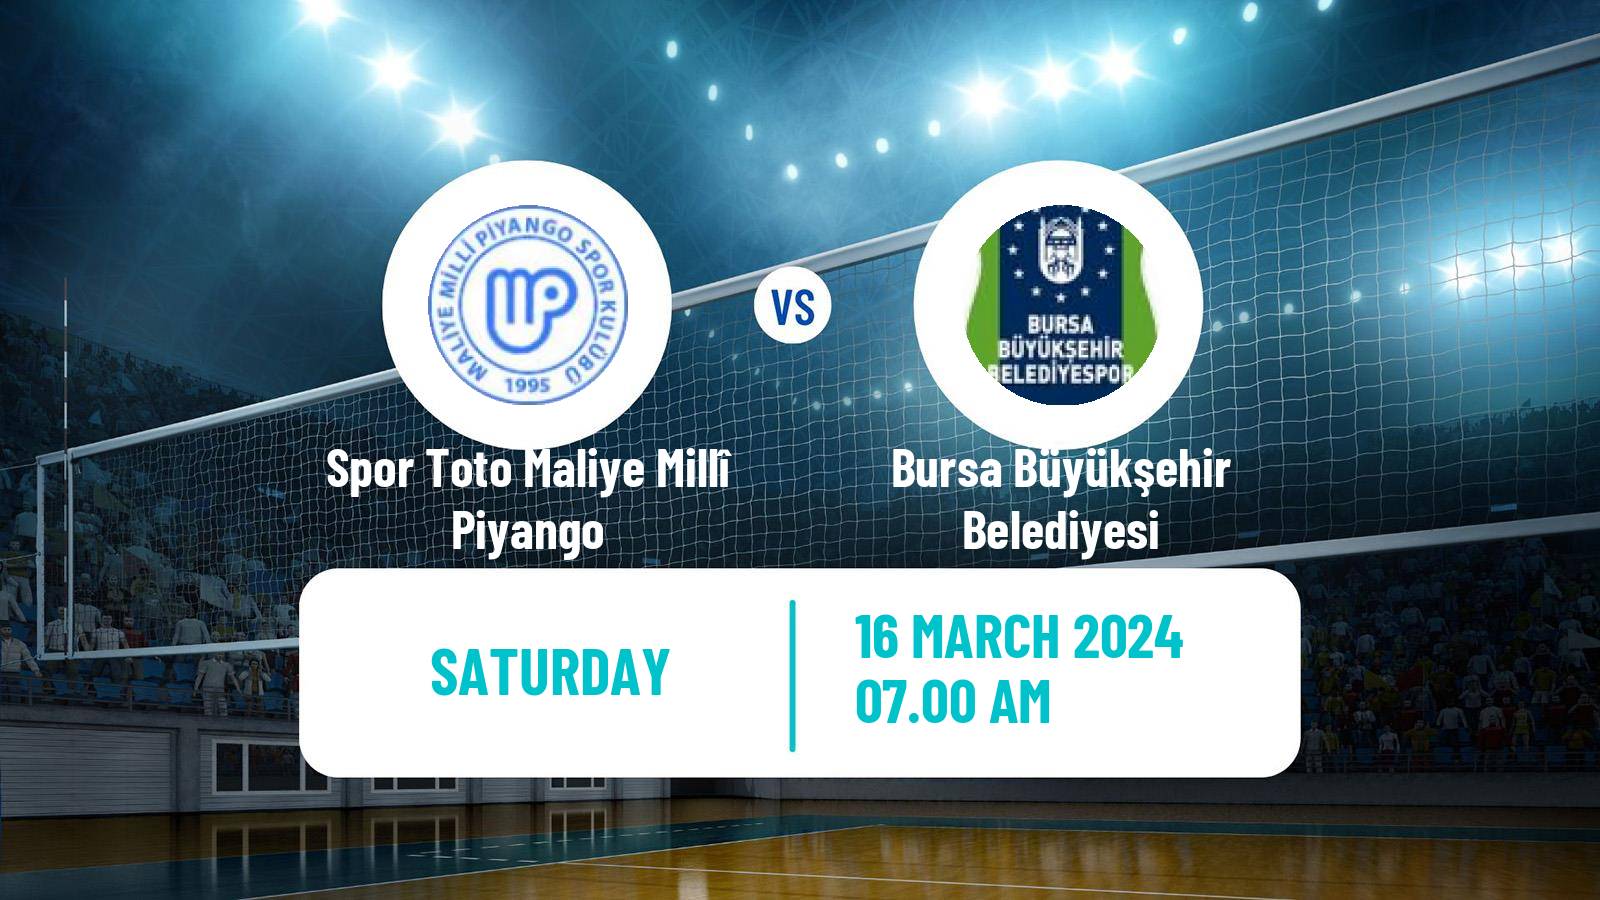 Volleyball Turkish Efeler Ligi Volleyball Spor Toto Maliye Millî Piyango - Bursa Büyükşehir Belediyesi